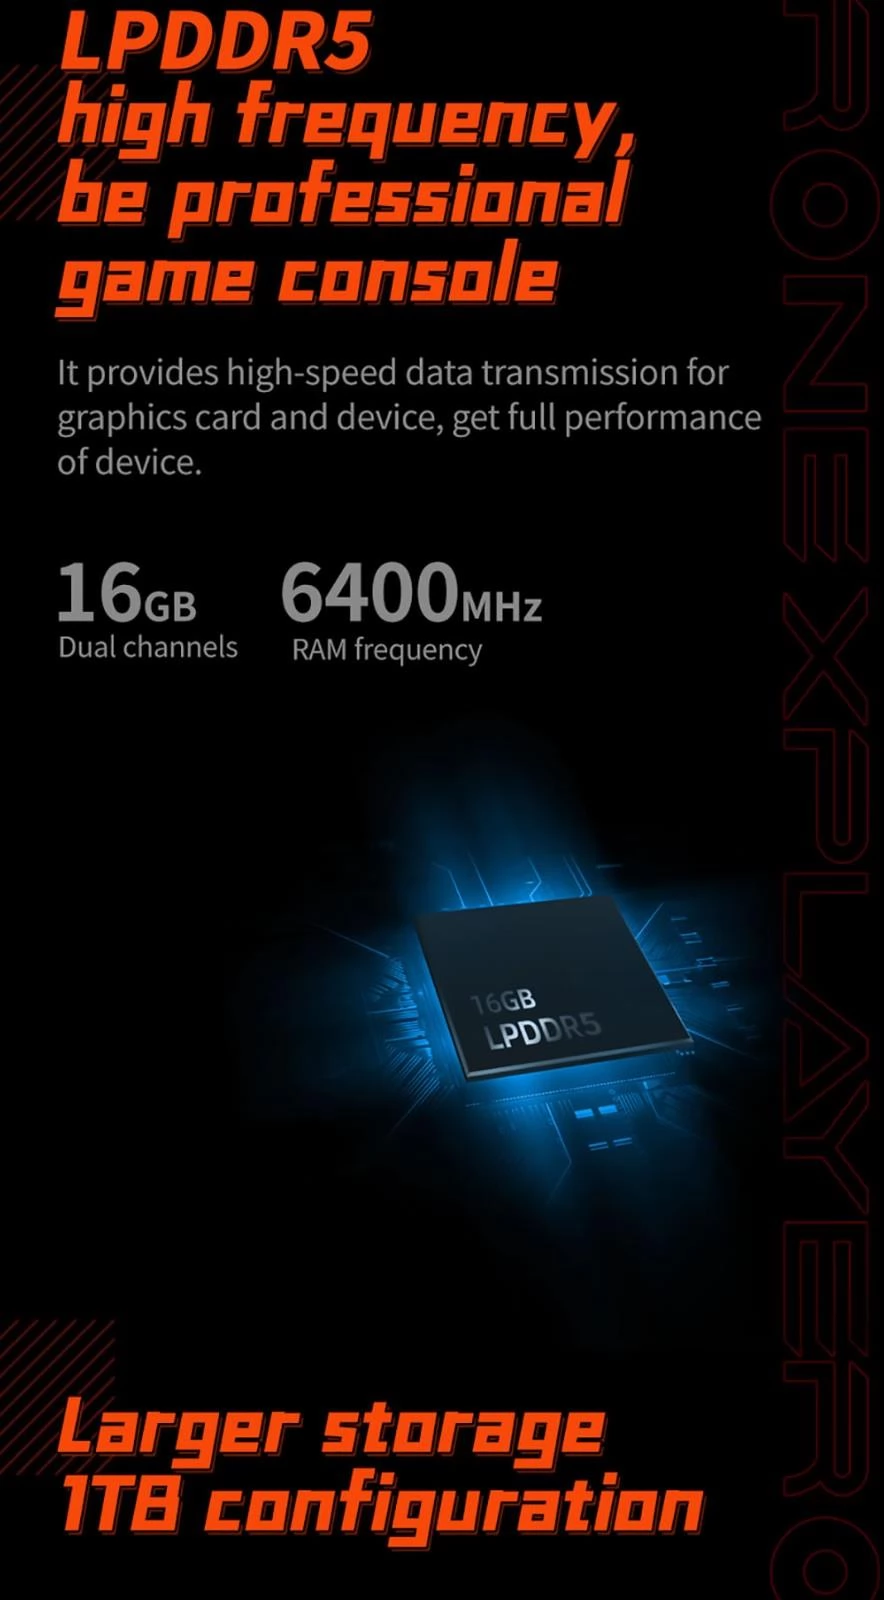 ONE Netbook OneXPlayer Mini Pro Game Console 7 IPS Display AMD RYZEN 7 6800U 16GB LPDDR5 1TB M.2 12450mAh Battery Windows11